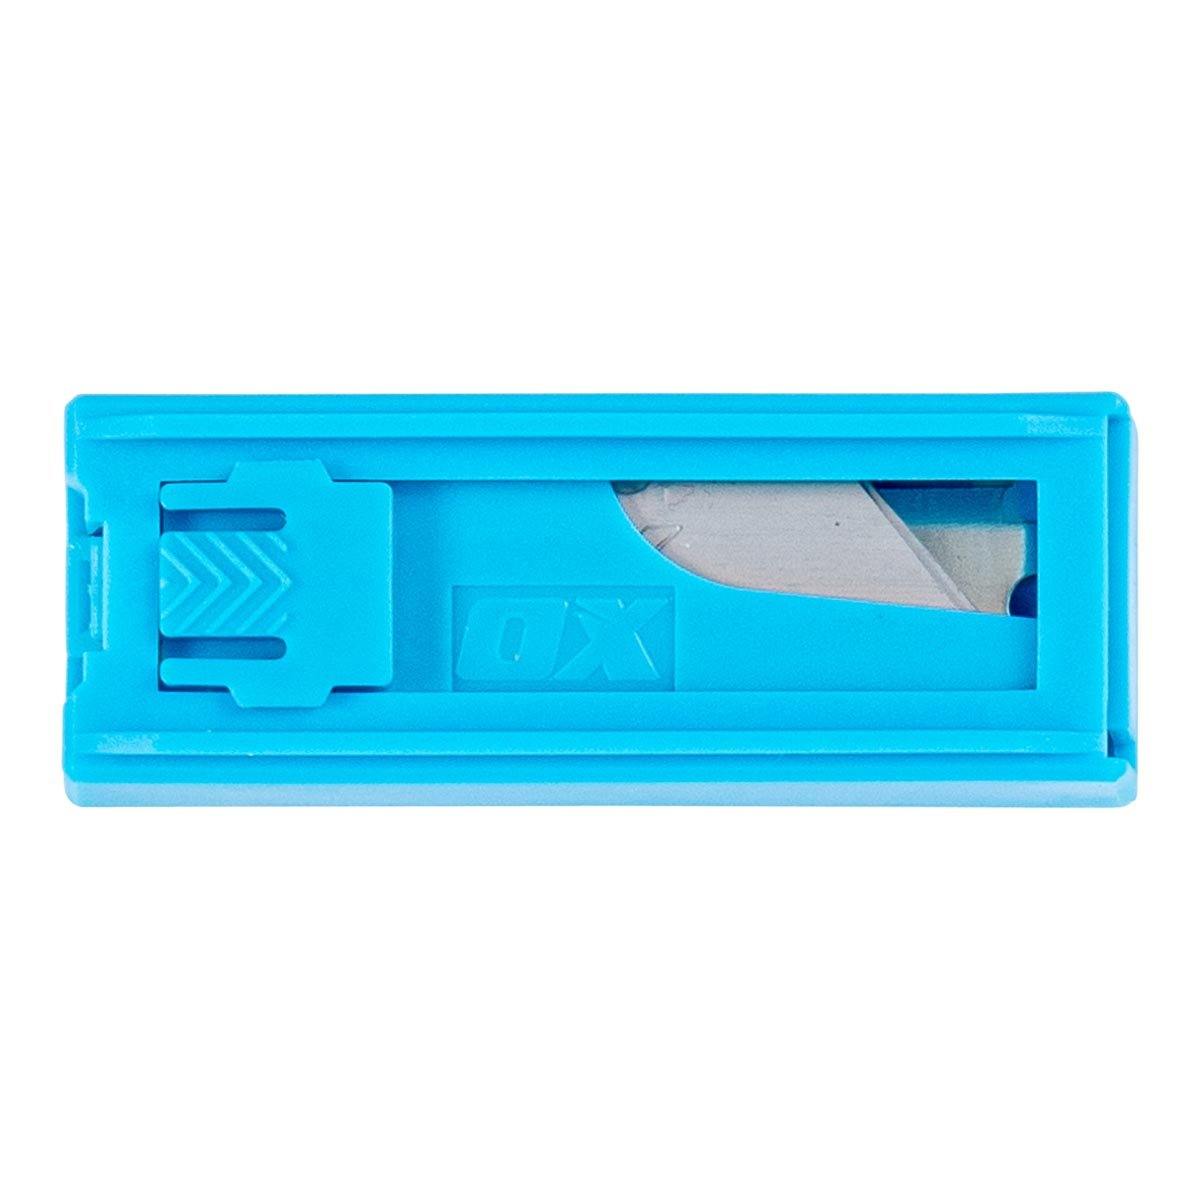 OX Pro 10 Pack Heavy Duty Knife Blades & Dispenser - Exo Supplies